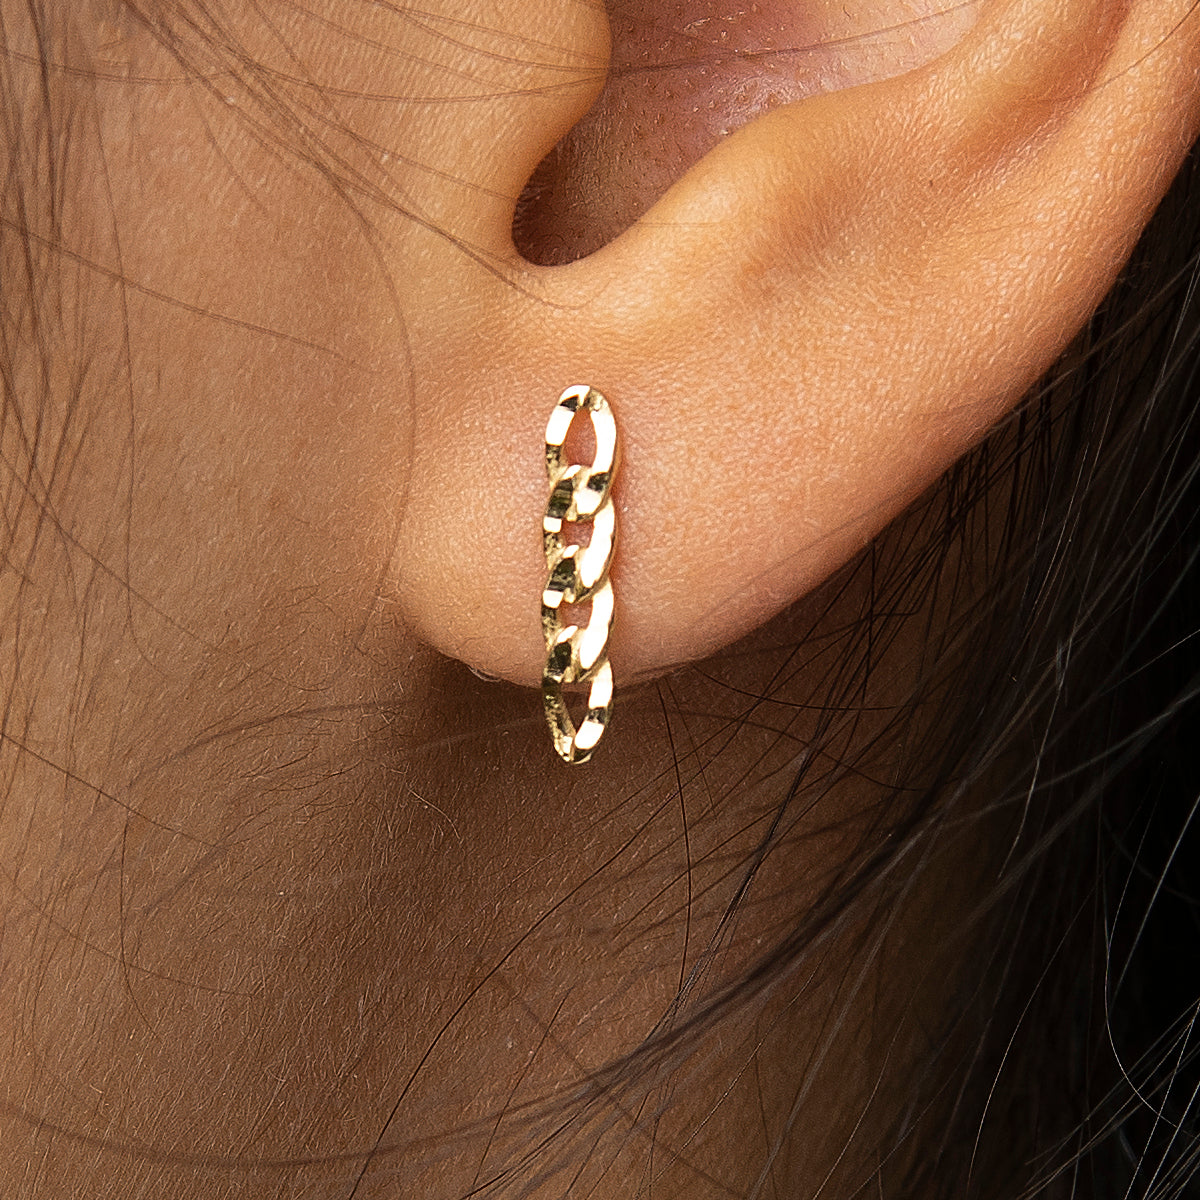 Gold Curb Chain Stud Earrings